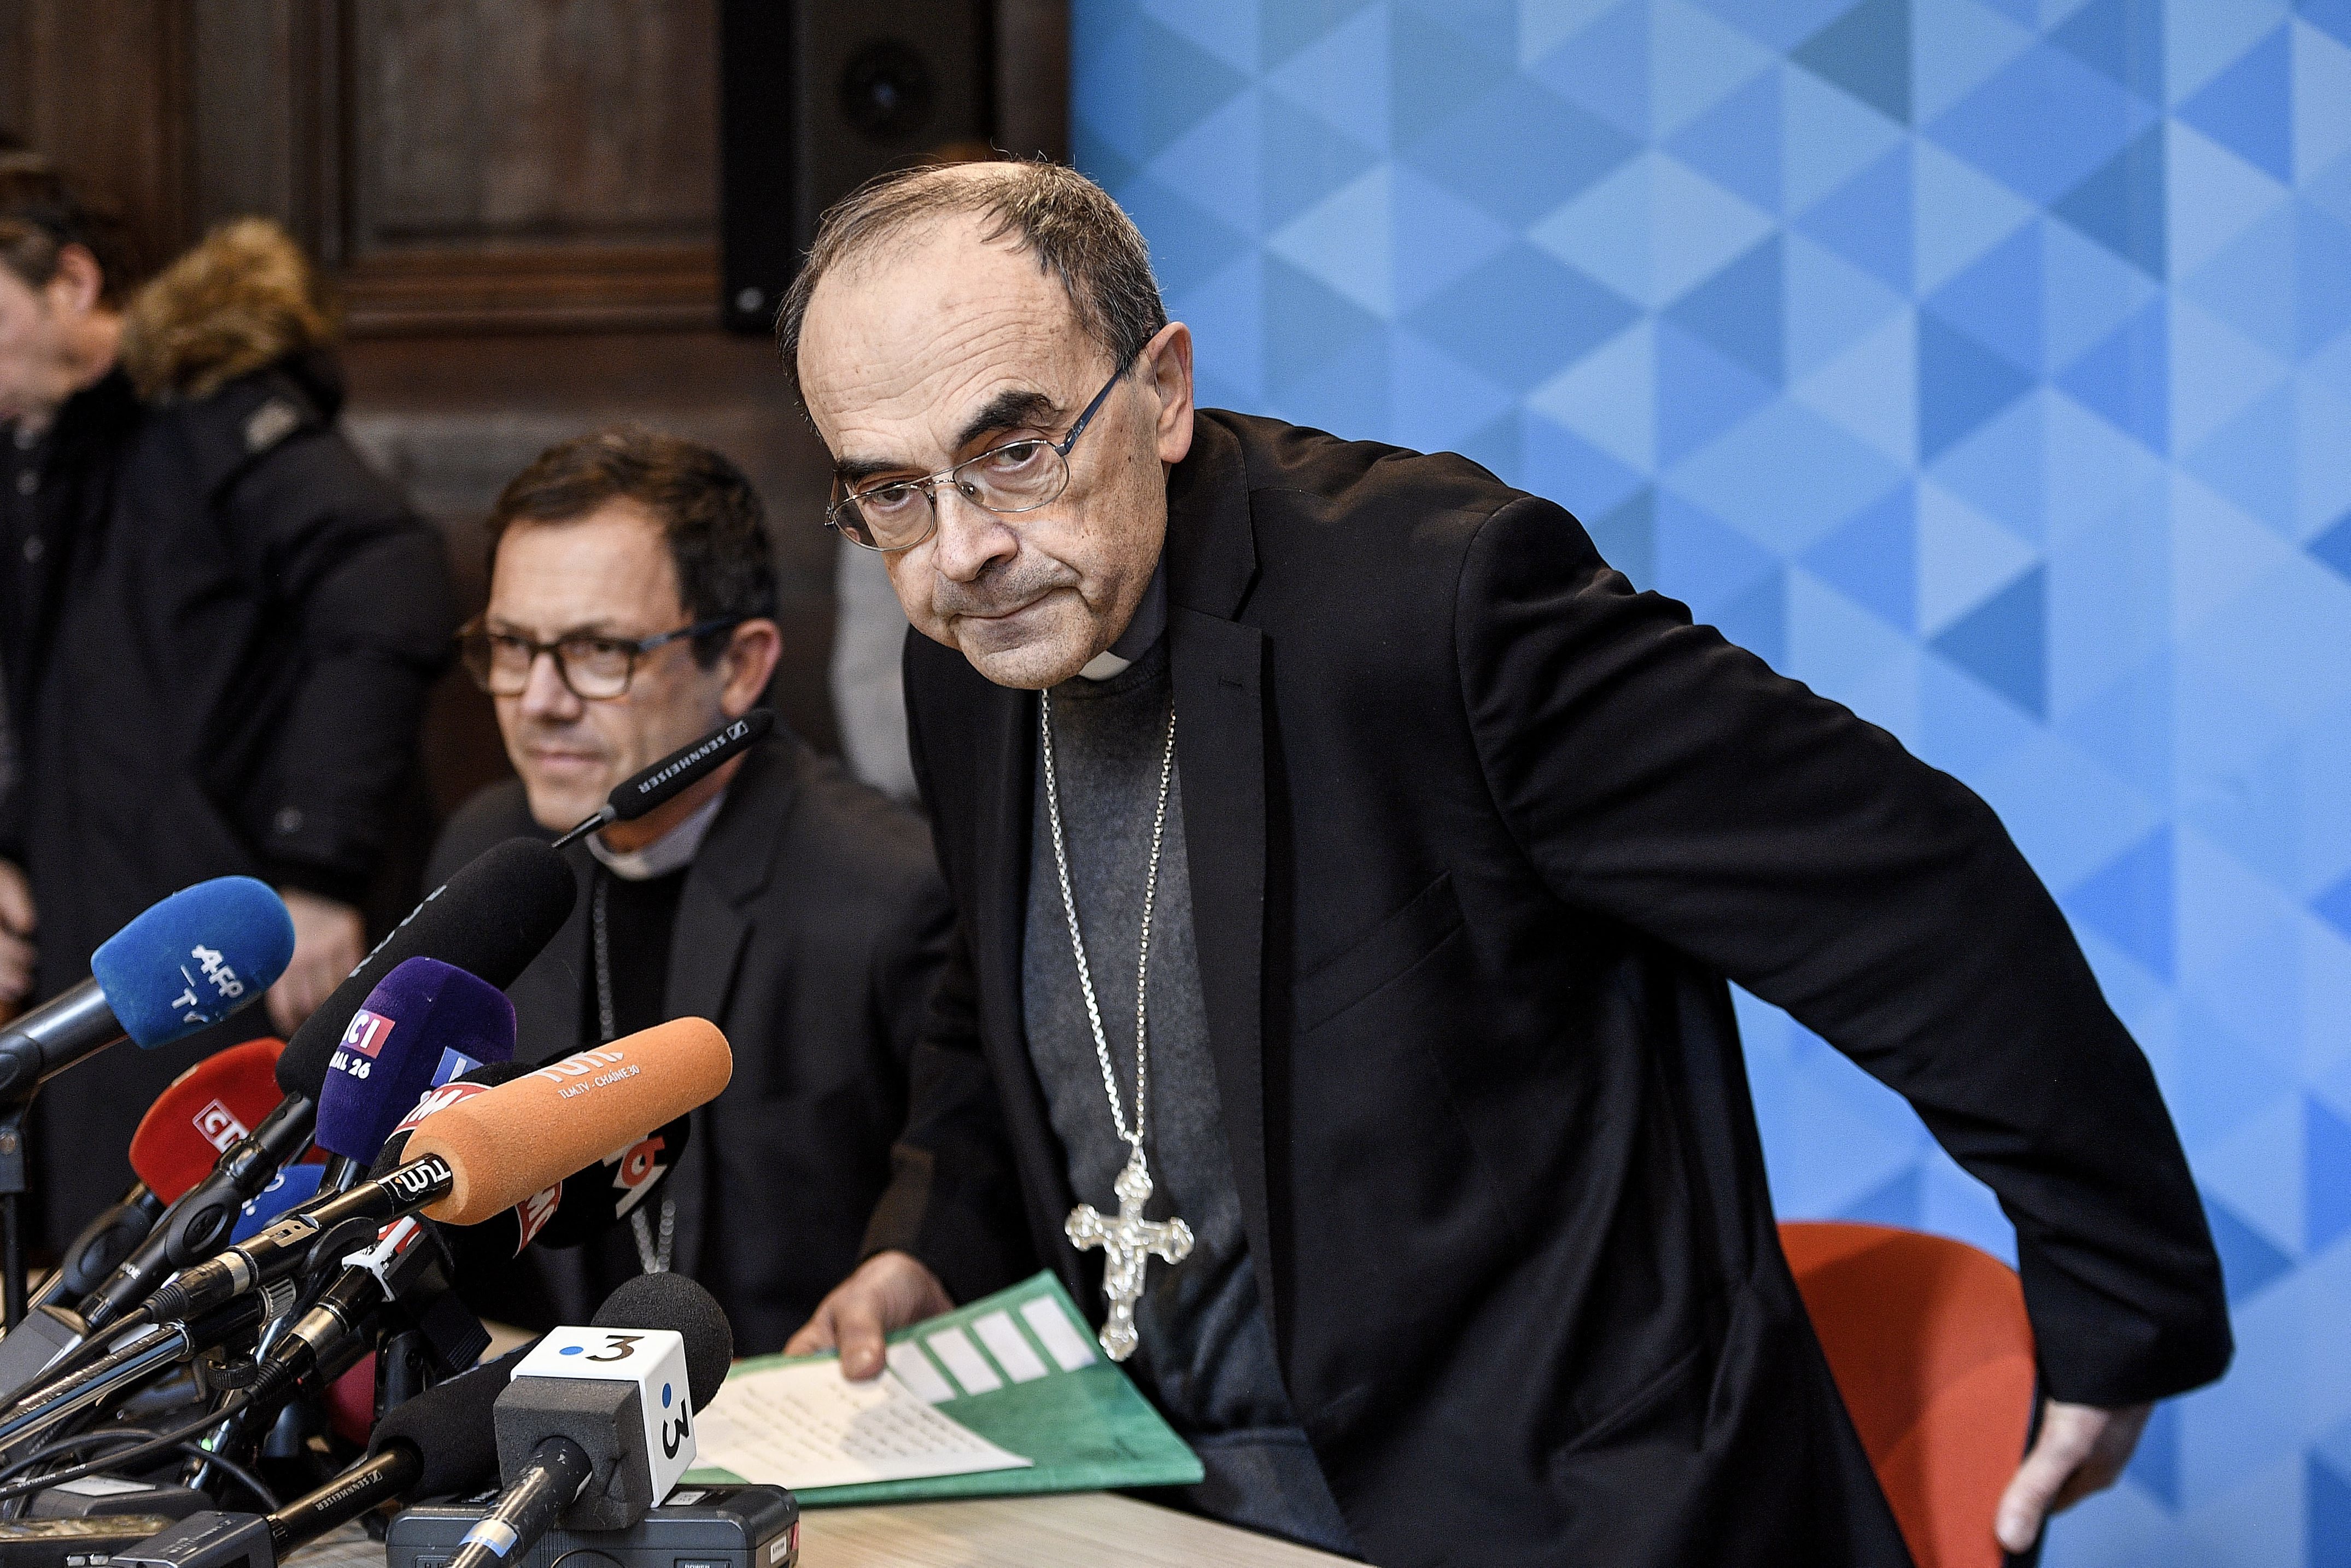 Lyon Catholics urge Barbarin to resubmit resignation to Pope